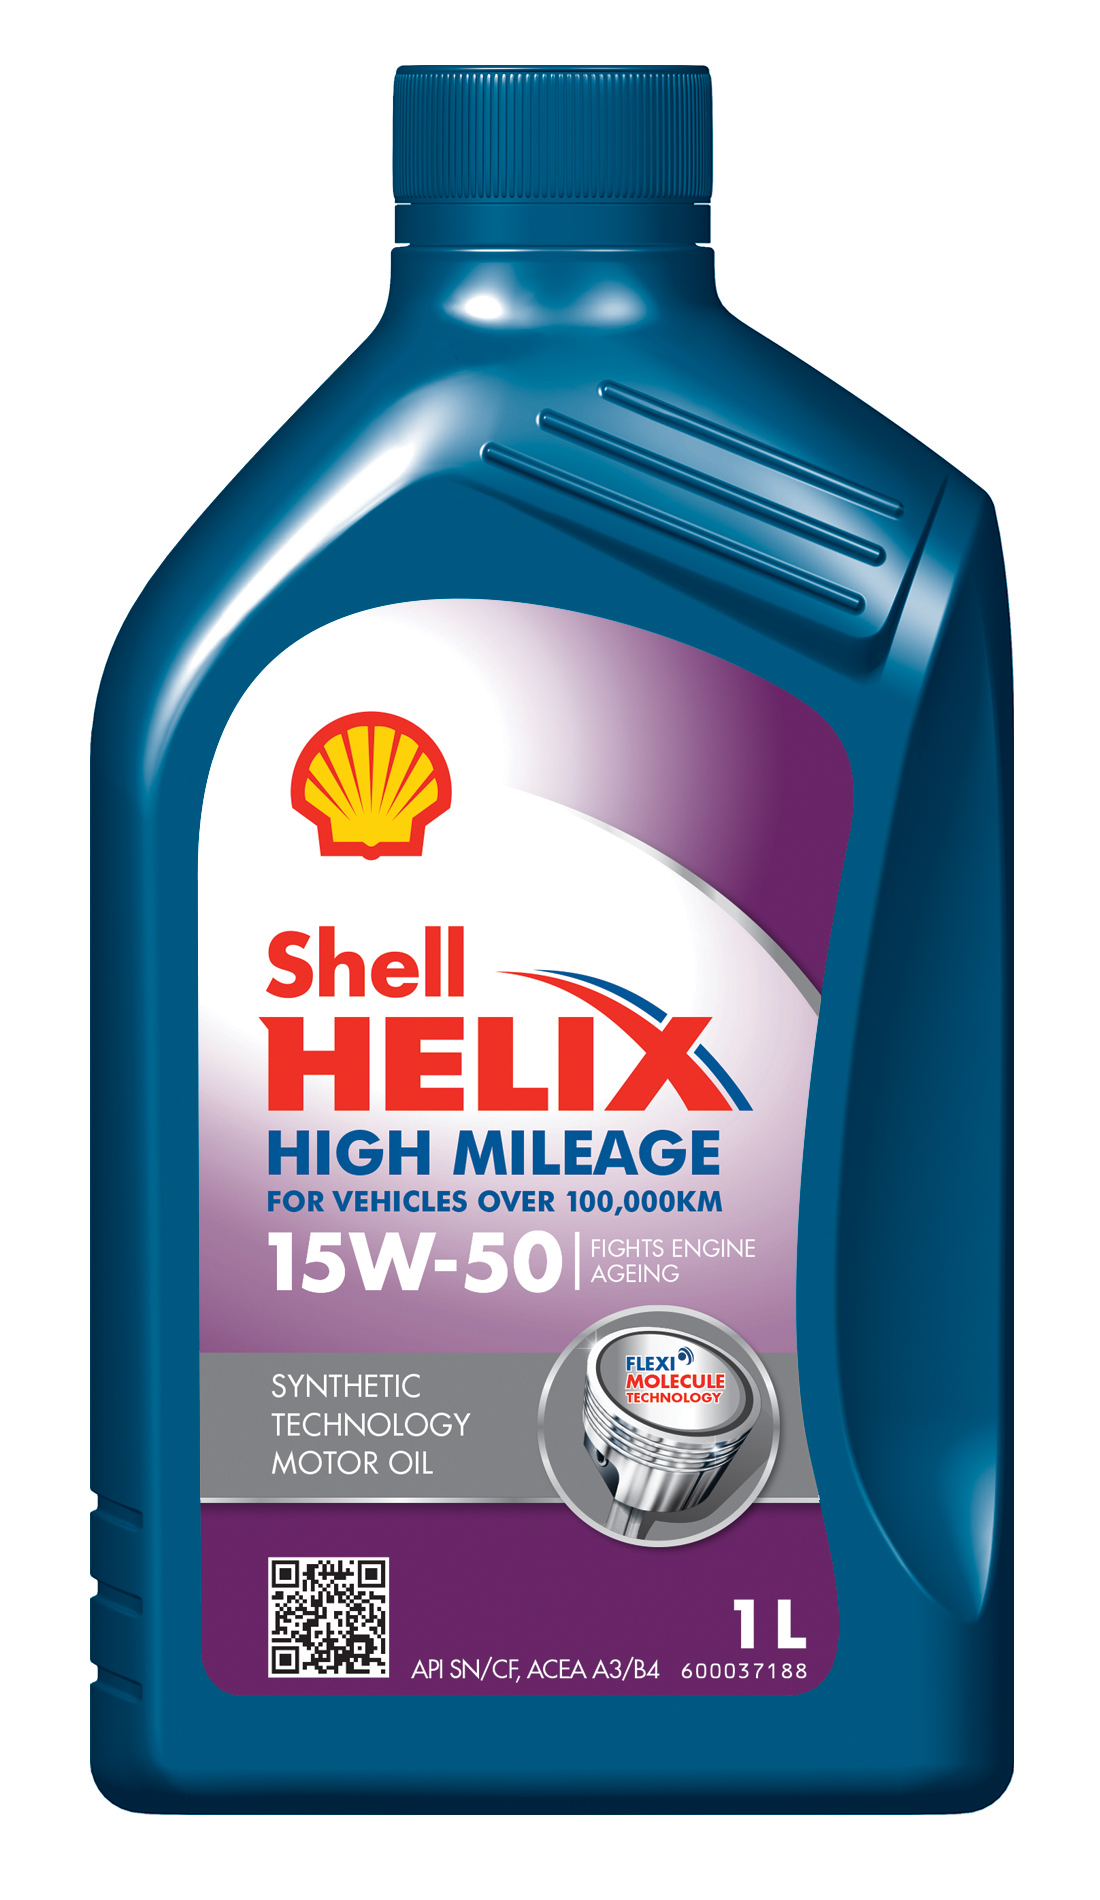 Helix high mileage. Шелл Хеликс High Mileage. Shell Helix Mileage.